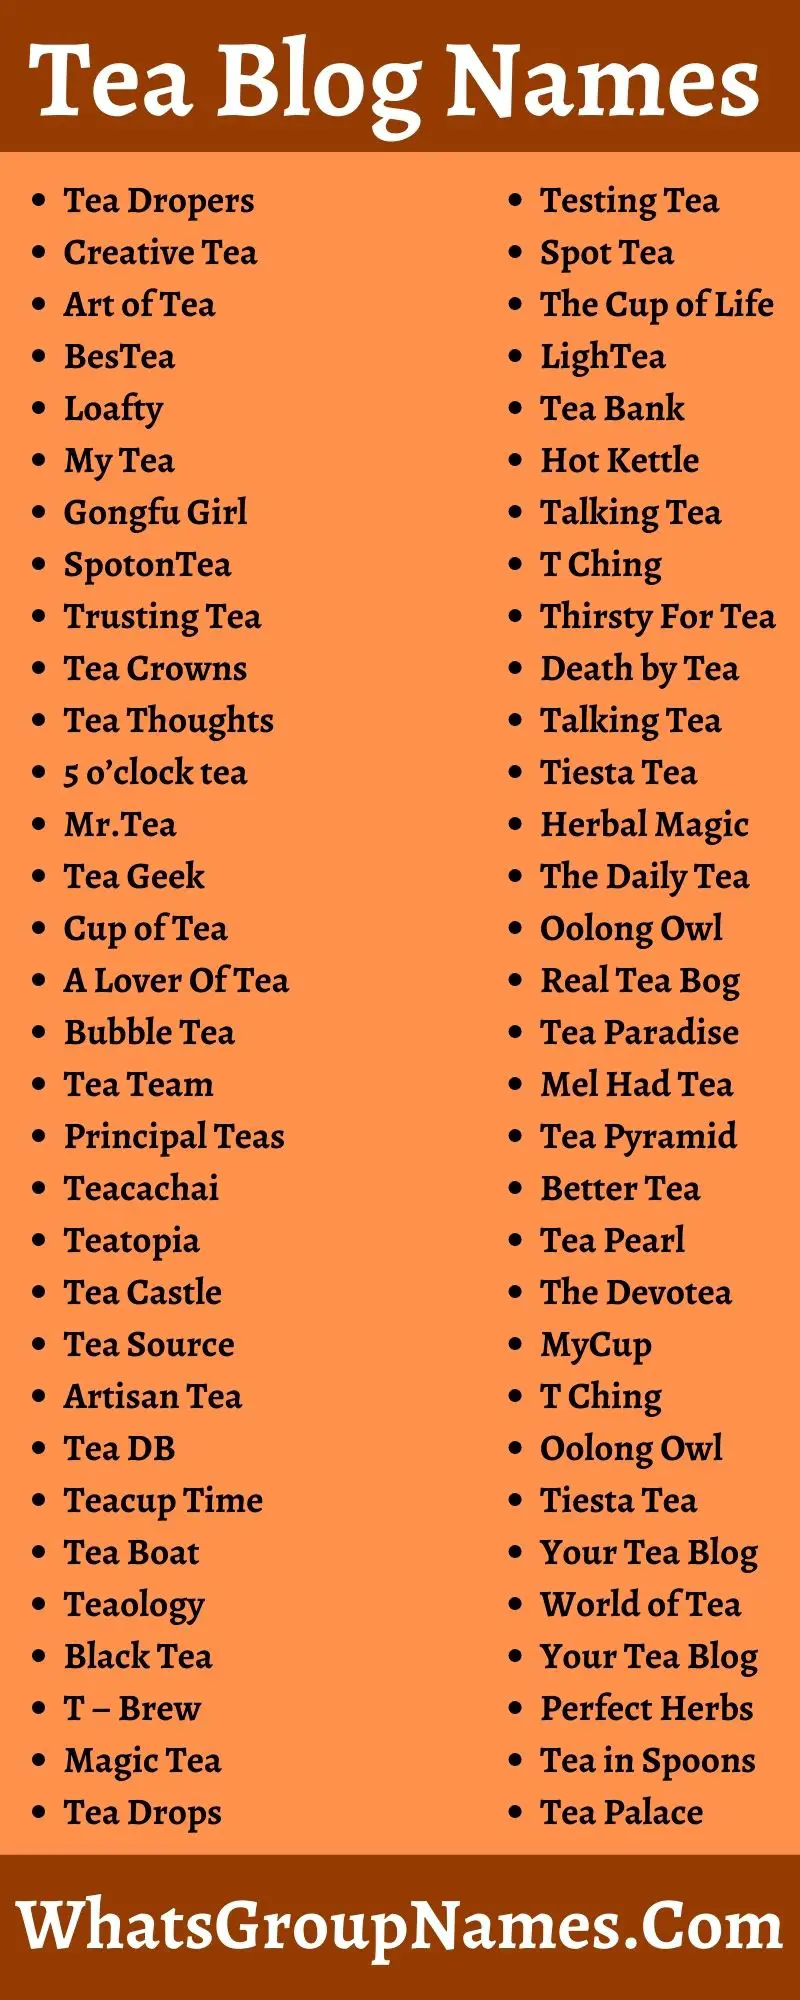 Tea Blog Names